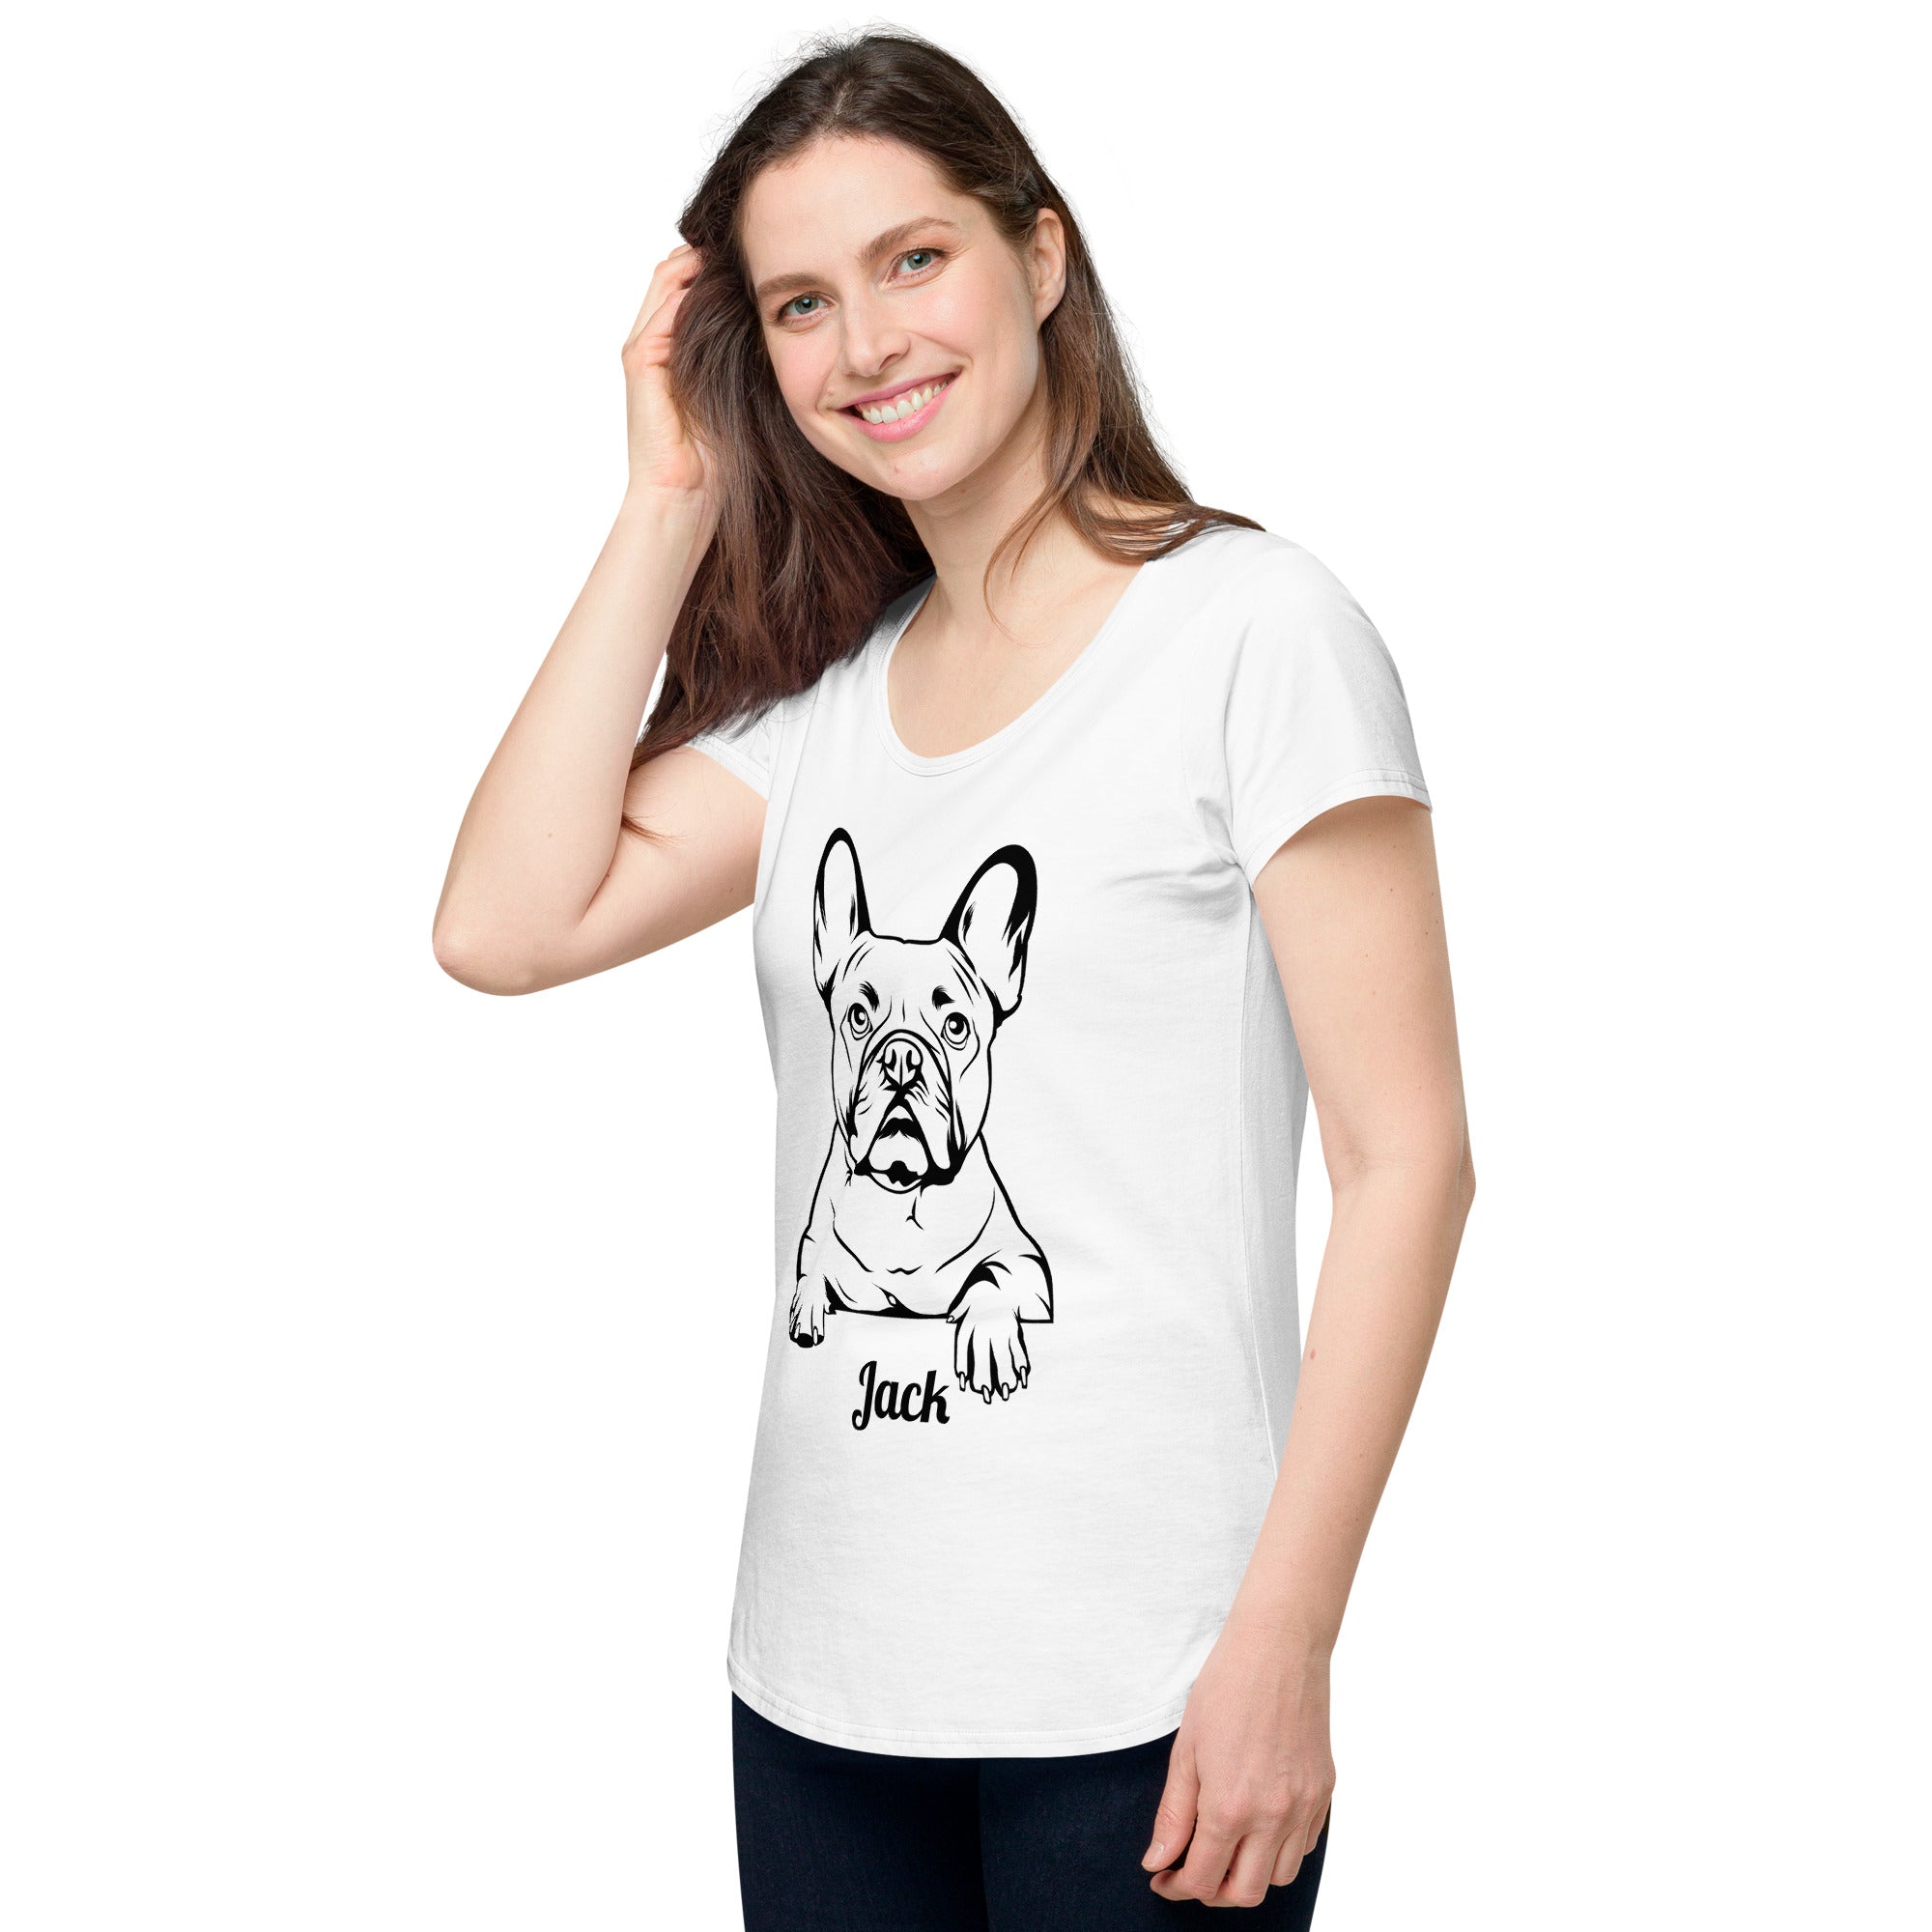 Custom Face Art Women's T-Shirt Pet Face T-Shirt (Dog, Cat, Human) (NEXT-DAY prod. avail. at checkout)